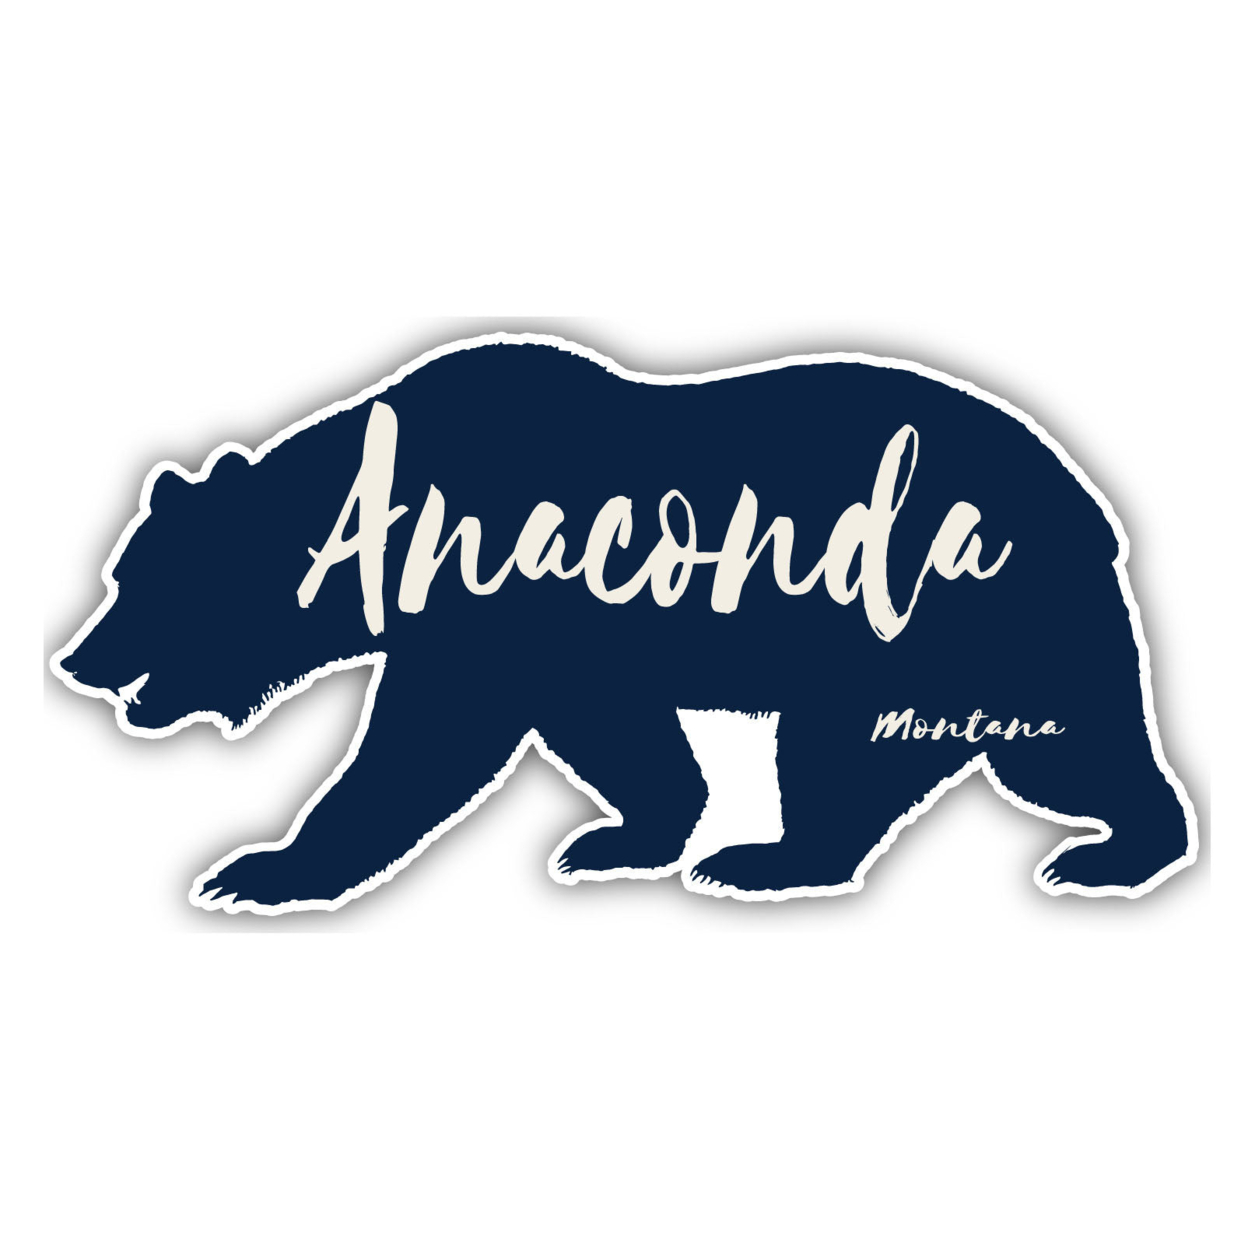 Anaconda Montana Souvenir Decorative Stickers (Choose Theme And Size) - 4-Pack, 2-Inch, Bear